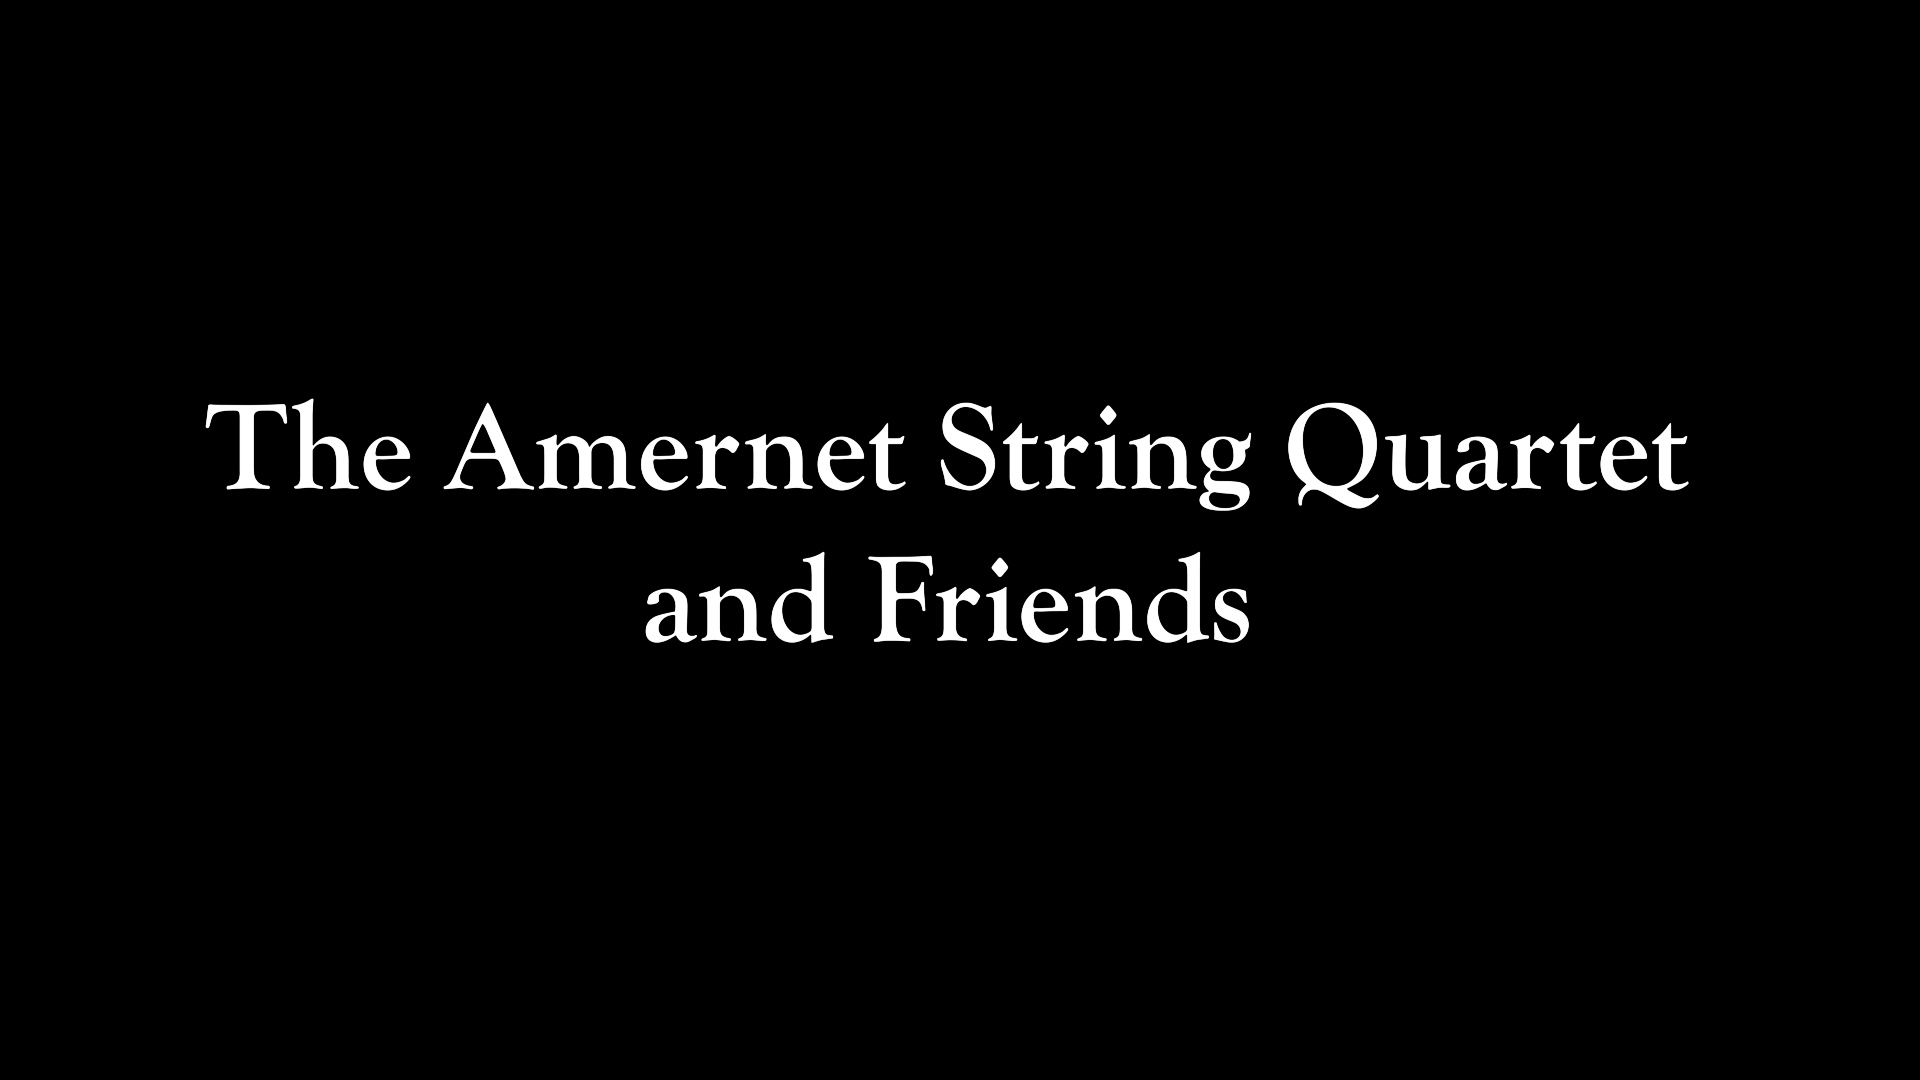 The Amernet String Quartet and Friends